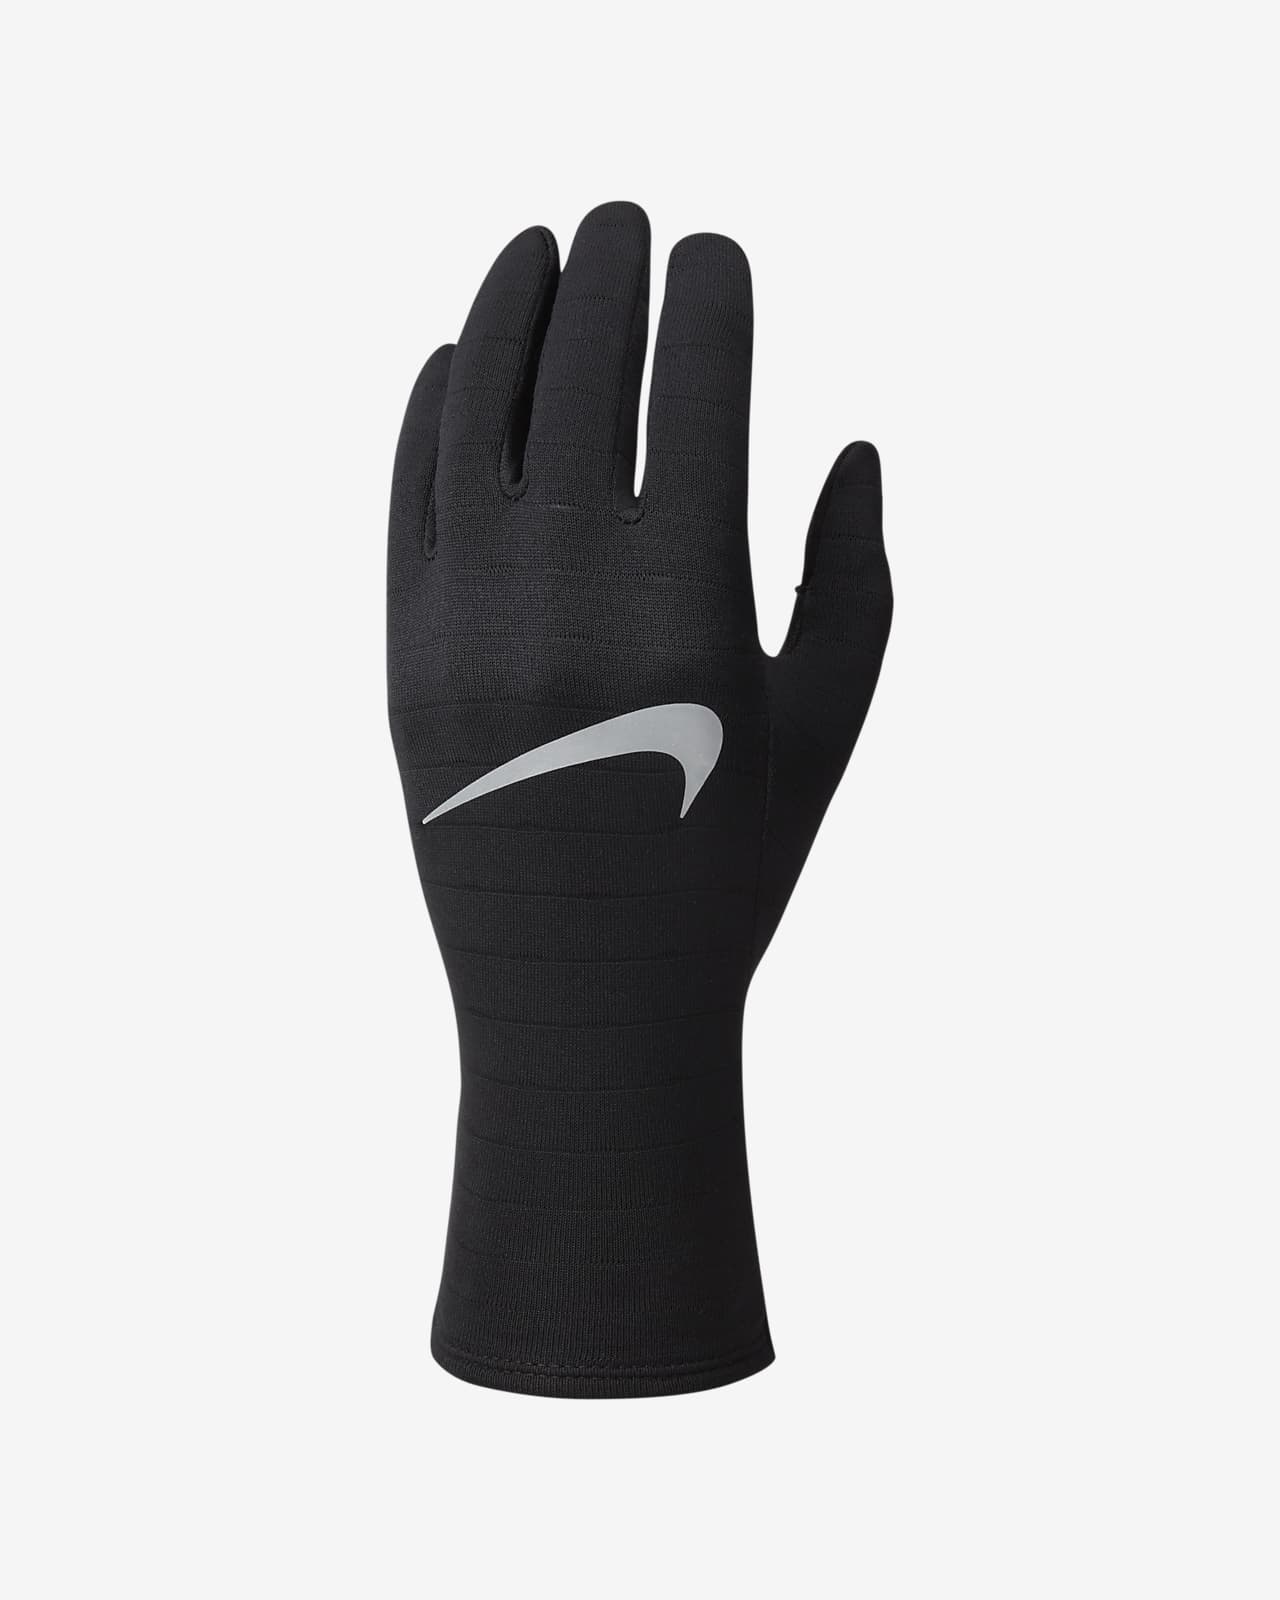 Les cinq meilleurs gants de running Nike. Nike FR